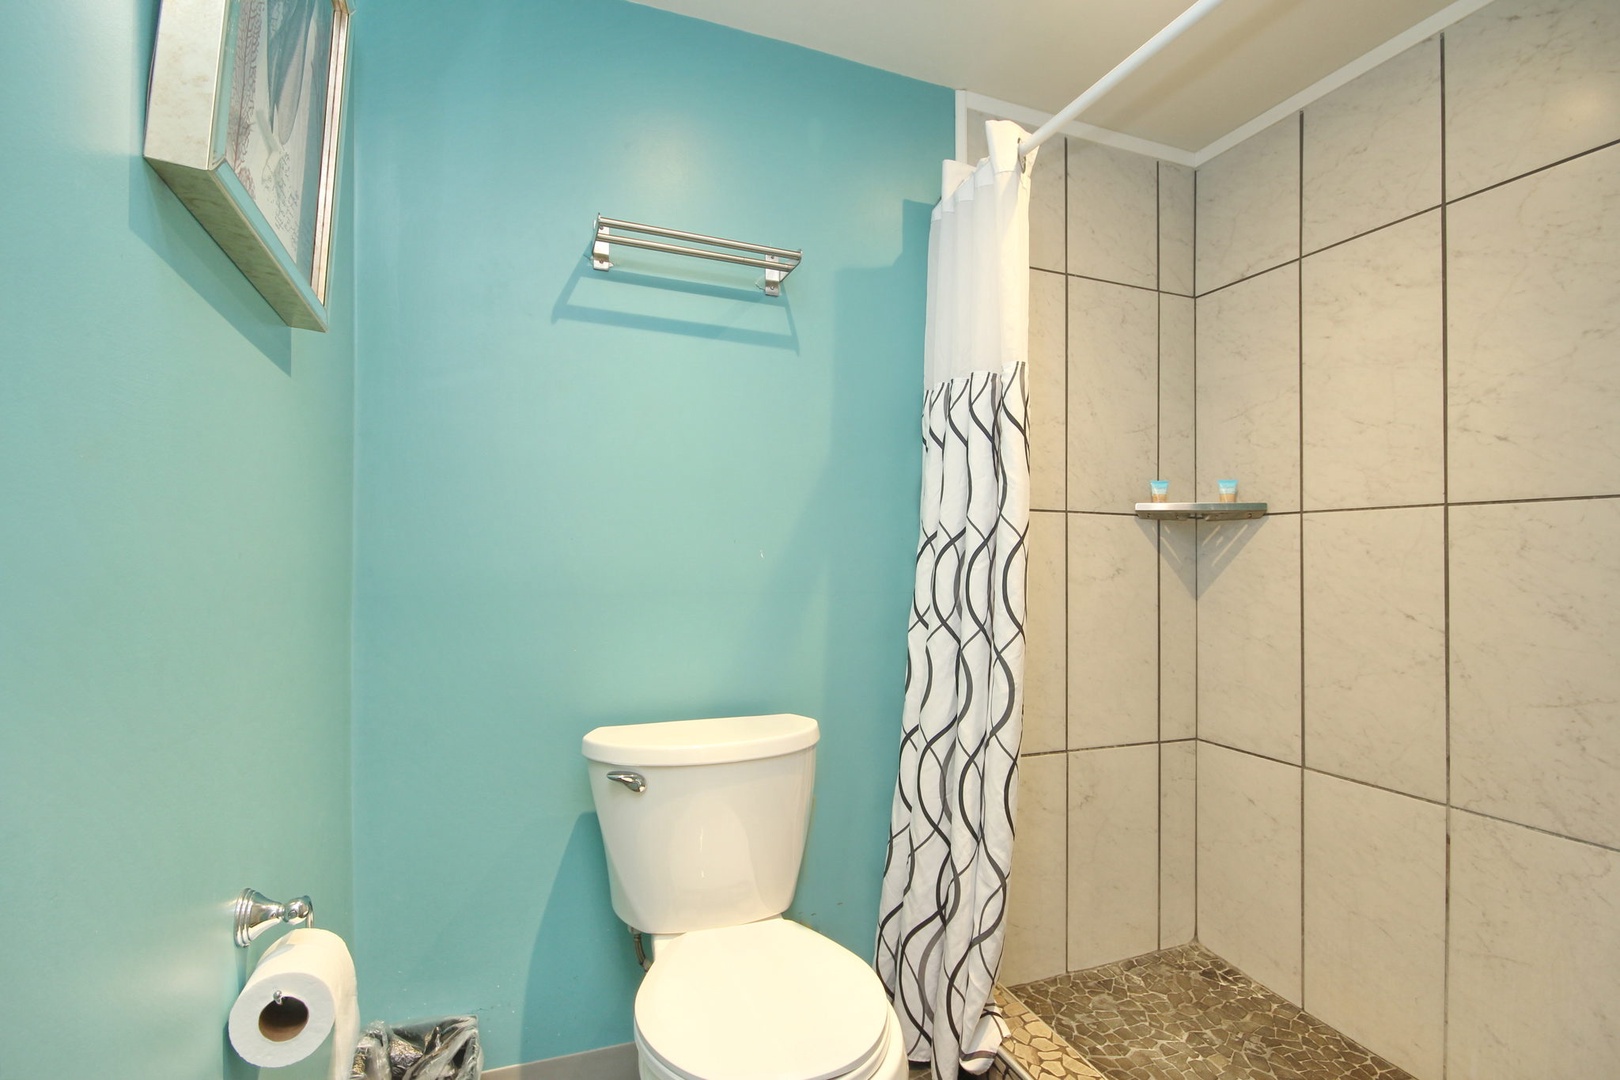 Clean restroom with modern amenities